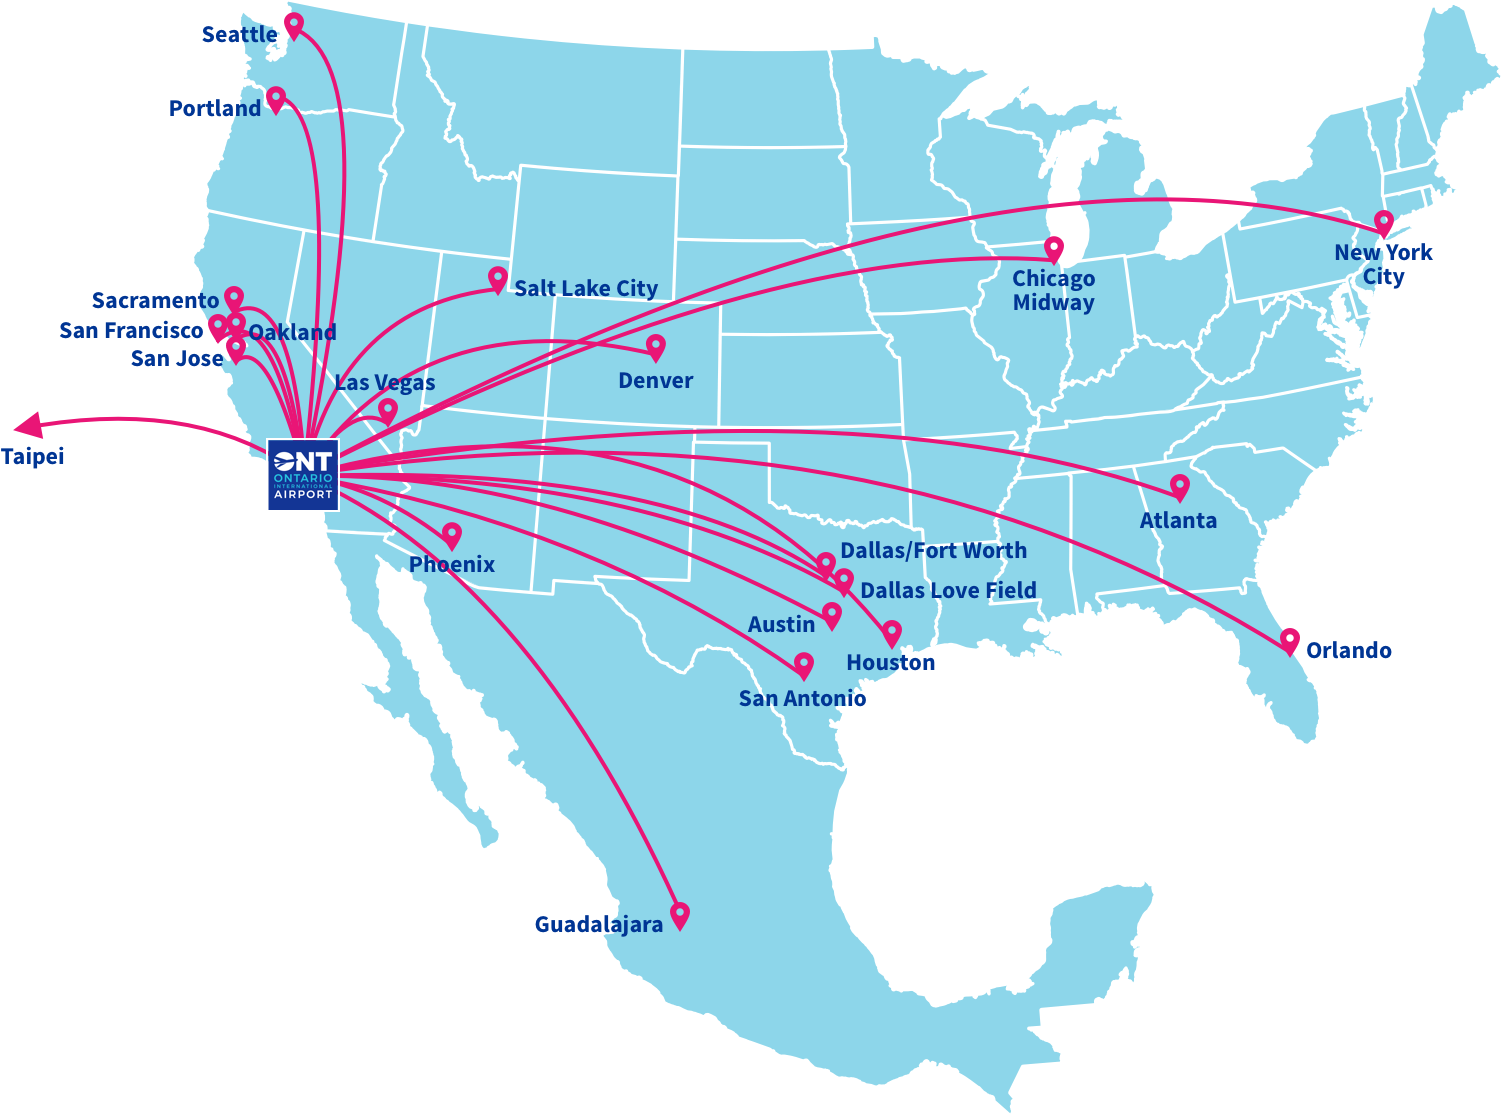 United Airlines маршрутная сеть. American Airlines маршрутная сеть. Маршрутная сеть s7 Airlines. Маршрутная сеть Mahan Air.